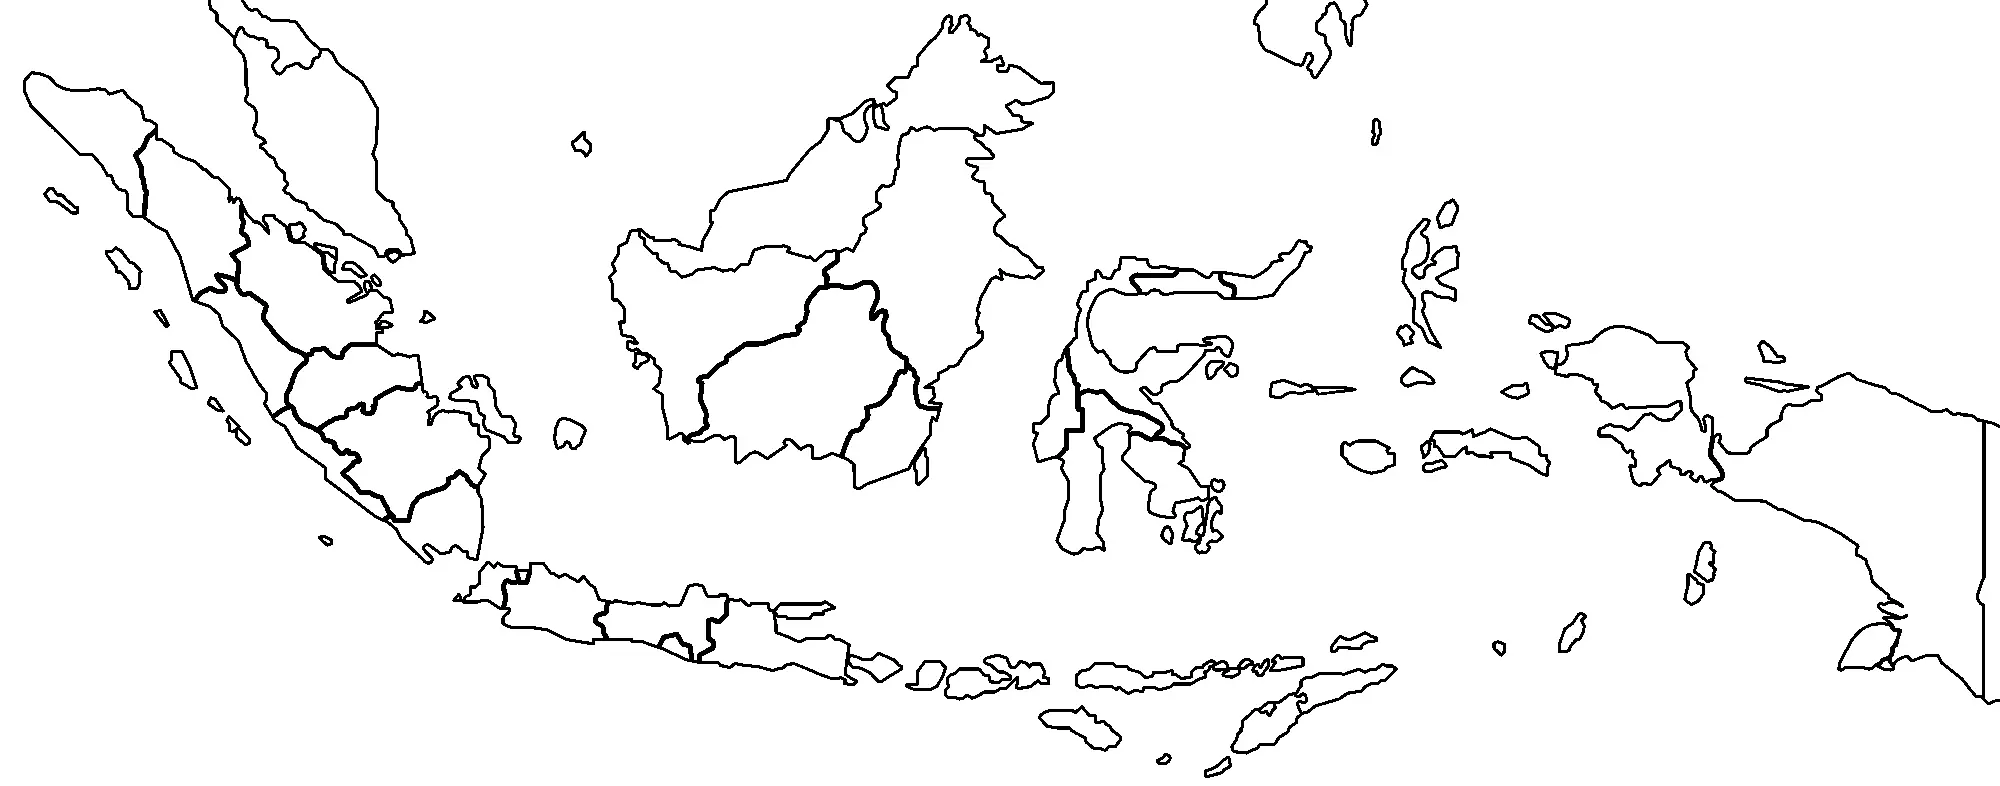 Indonesia Provinces Blank • Mapsof.net